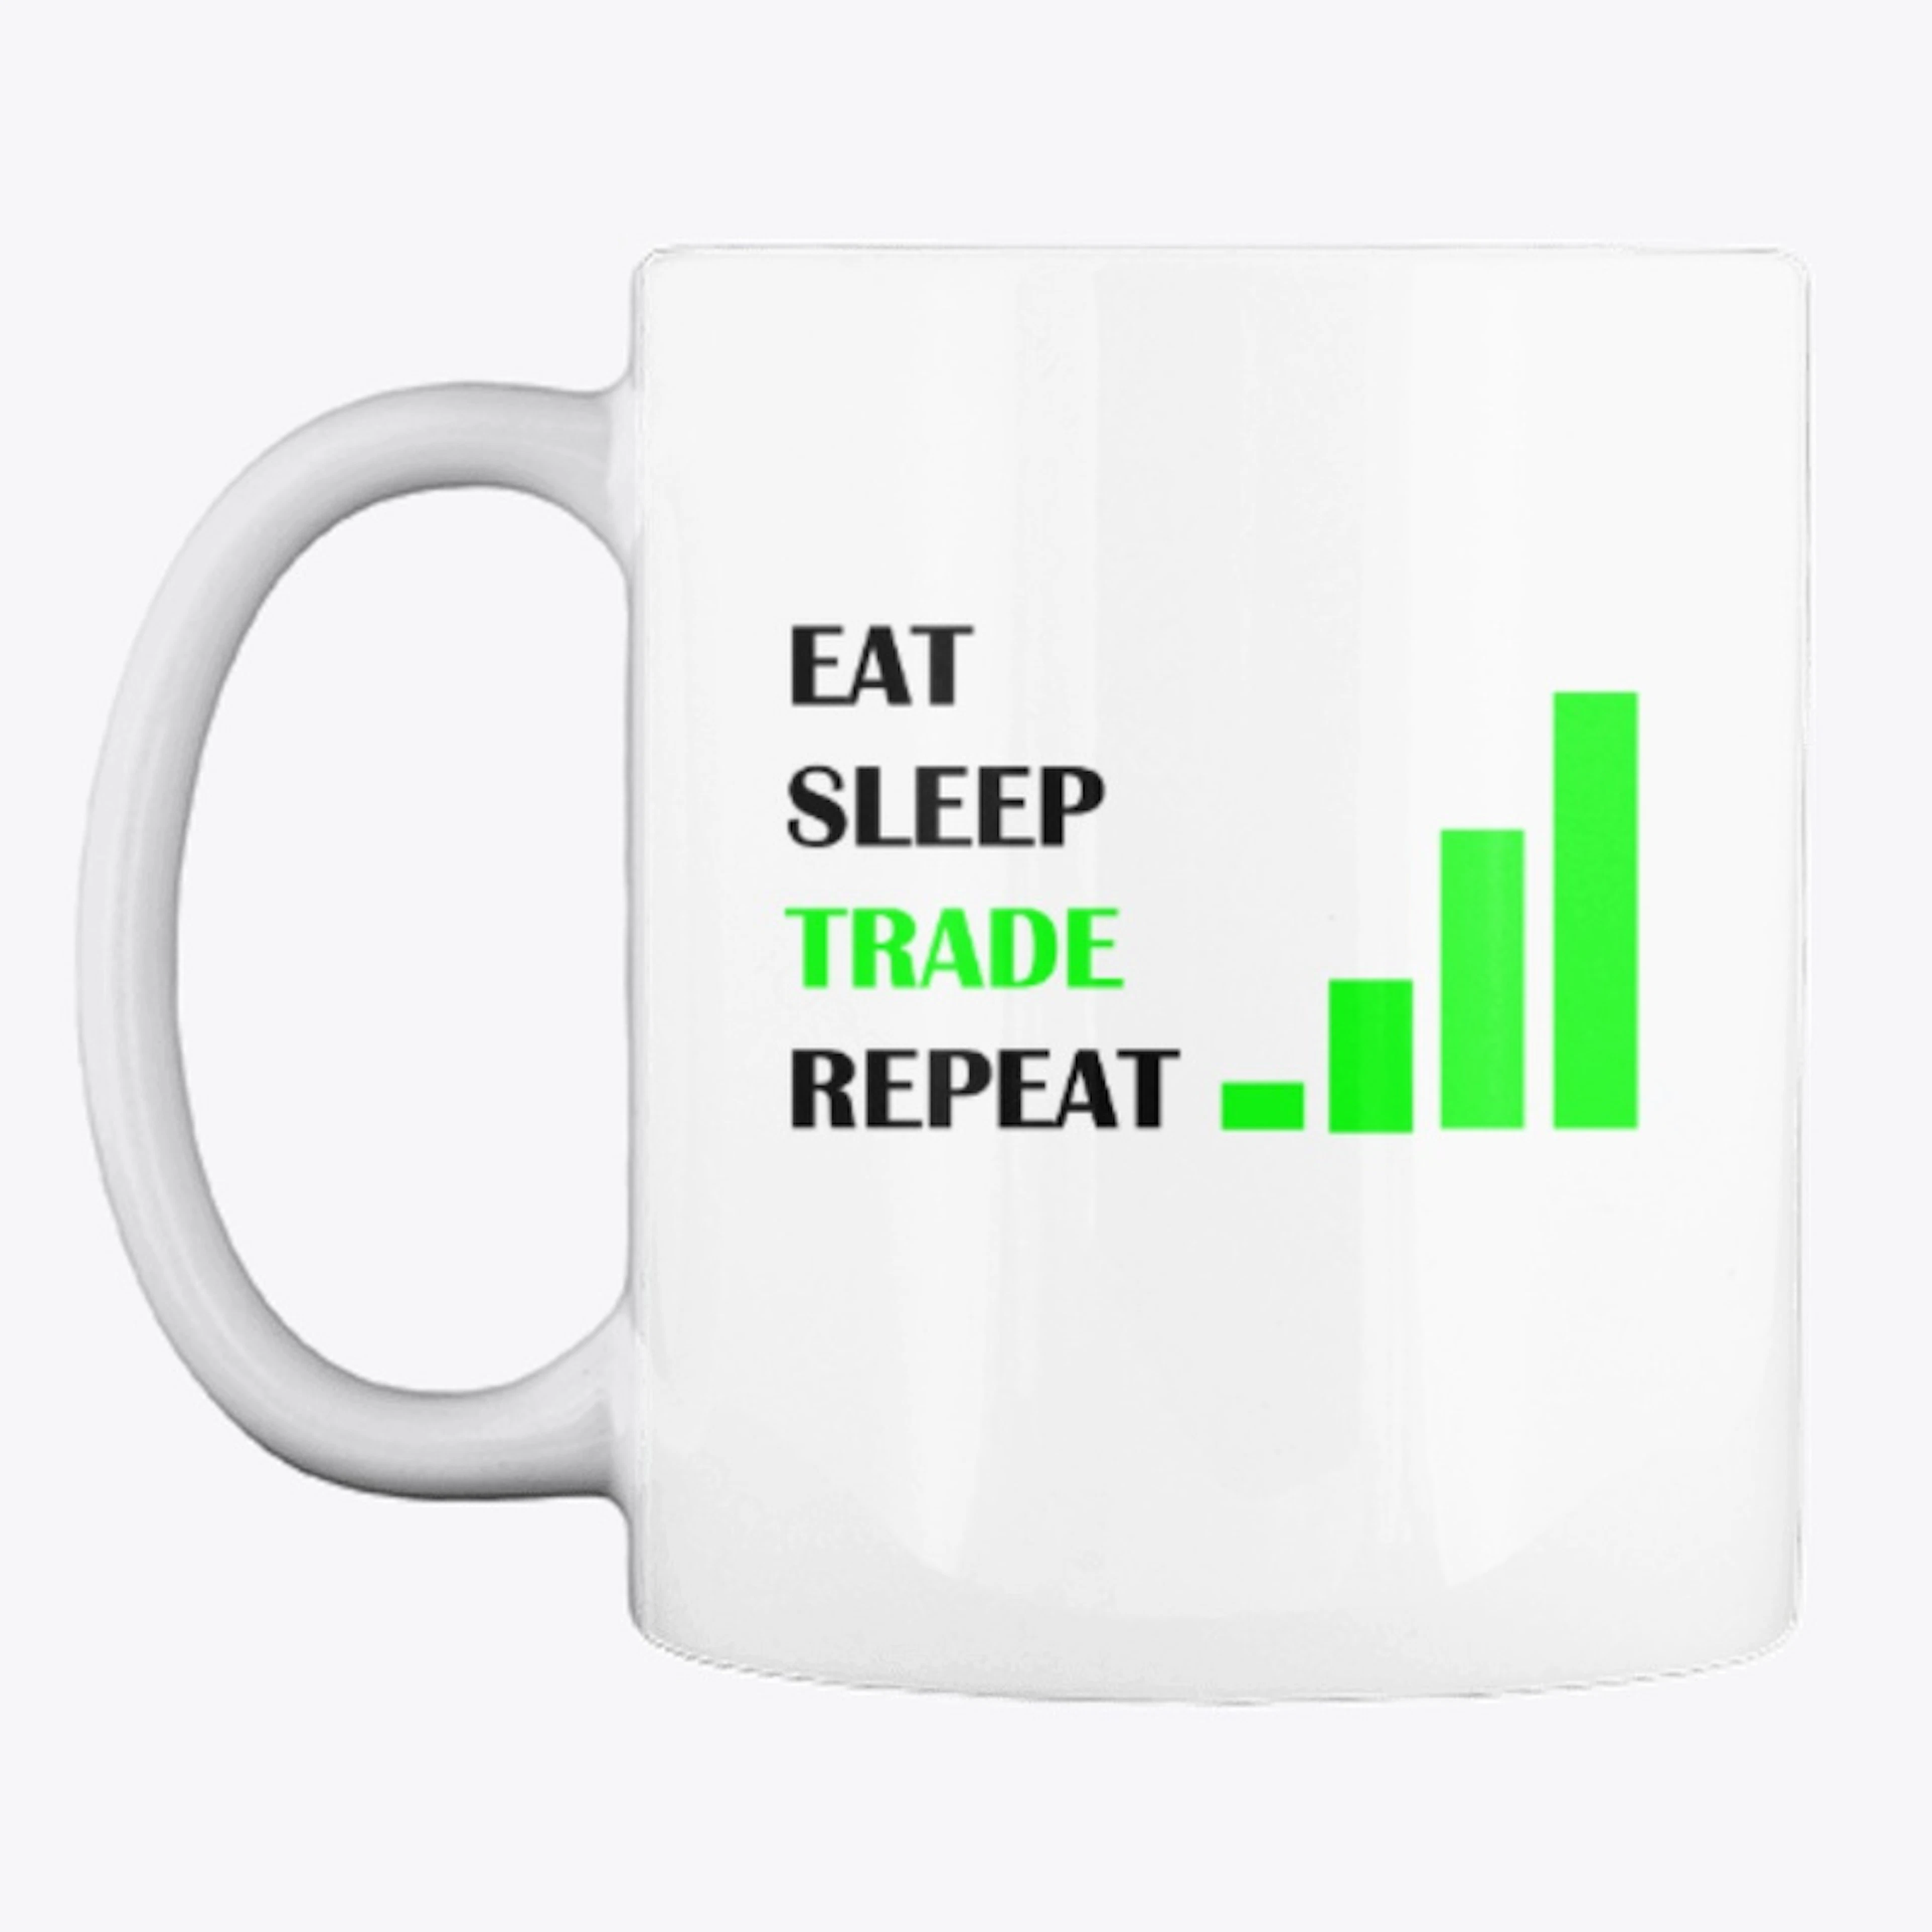 EAT SLEEP TRADE REPEAT - Mug